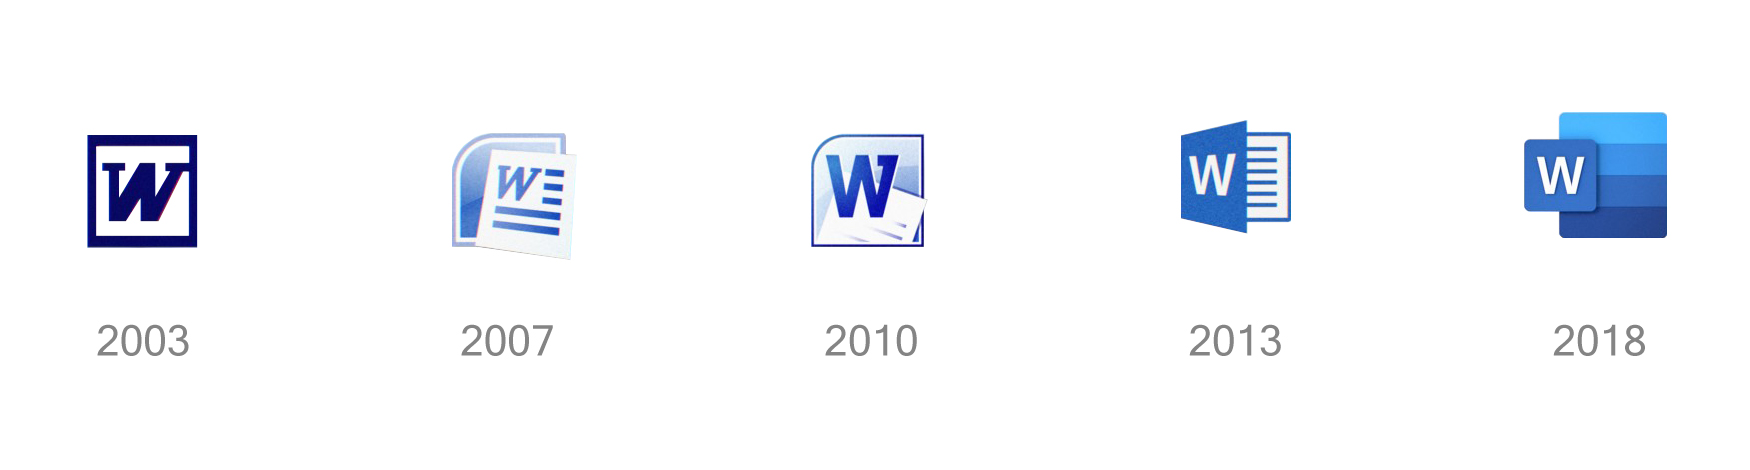 Microsoft Word 2003-2018